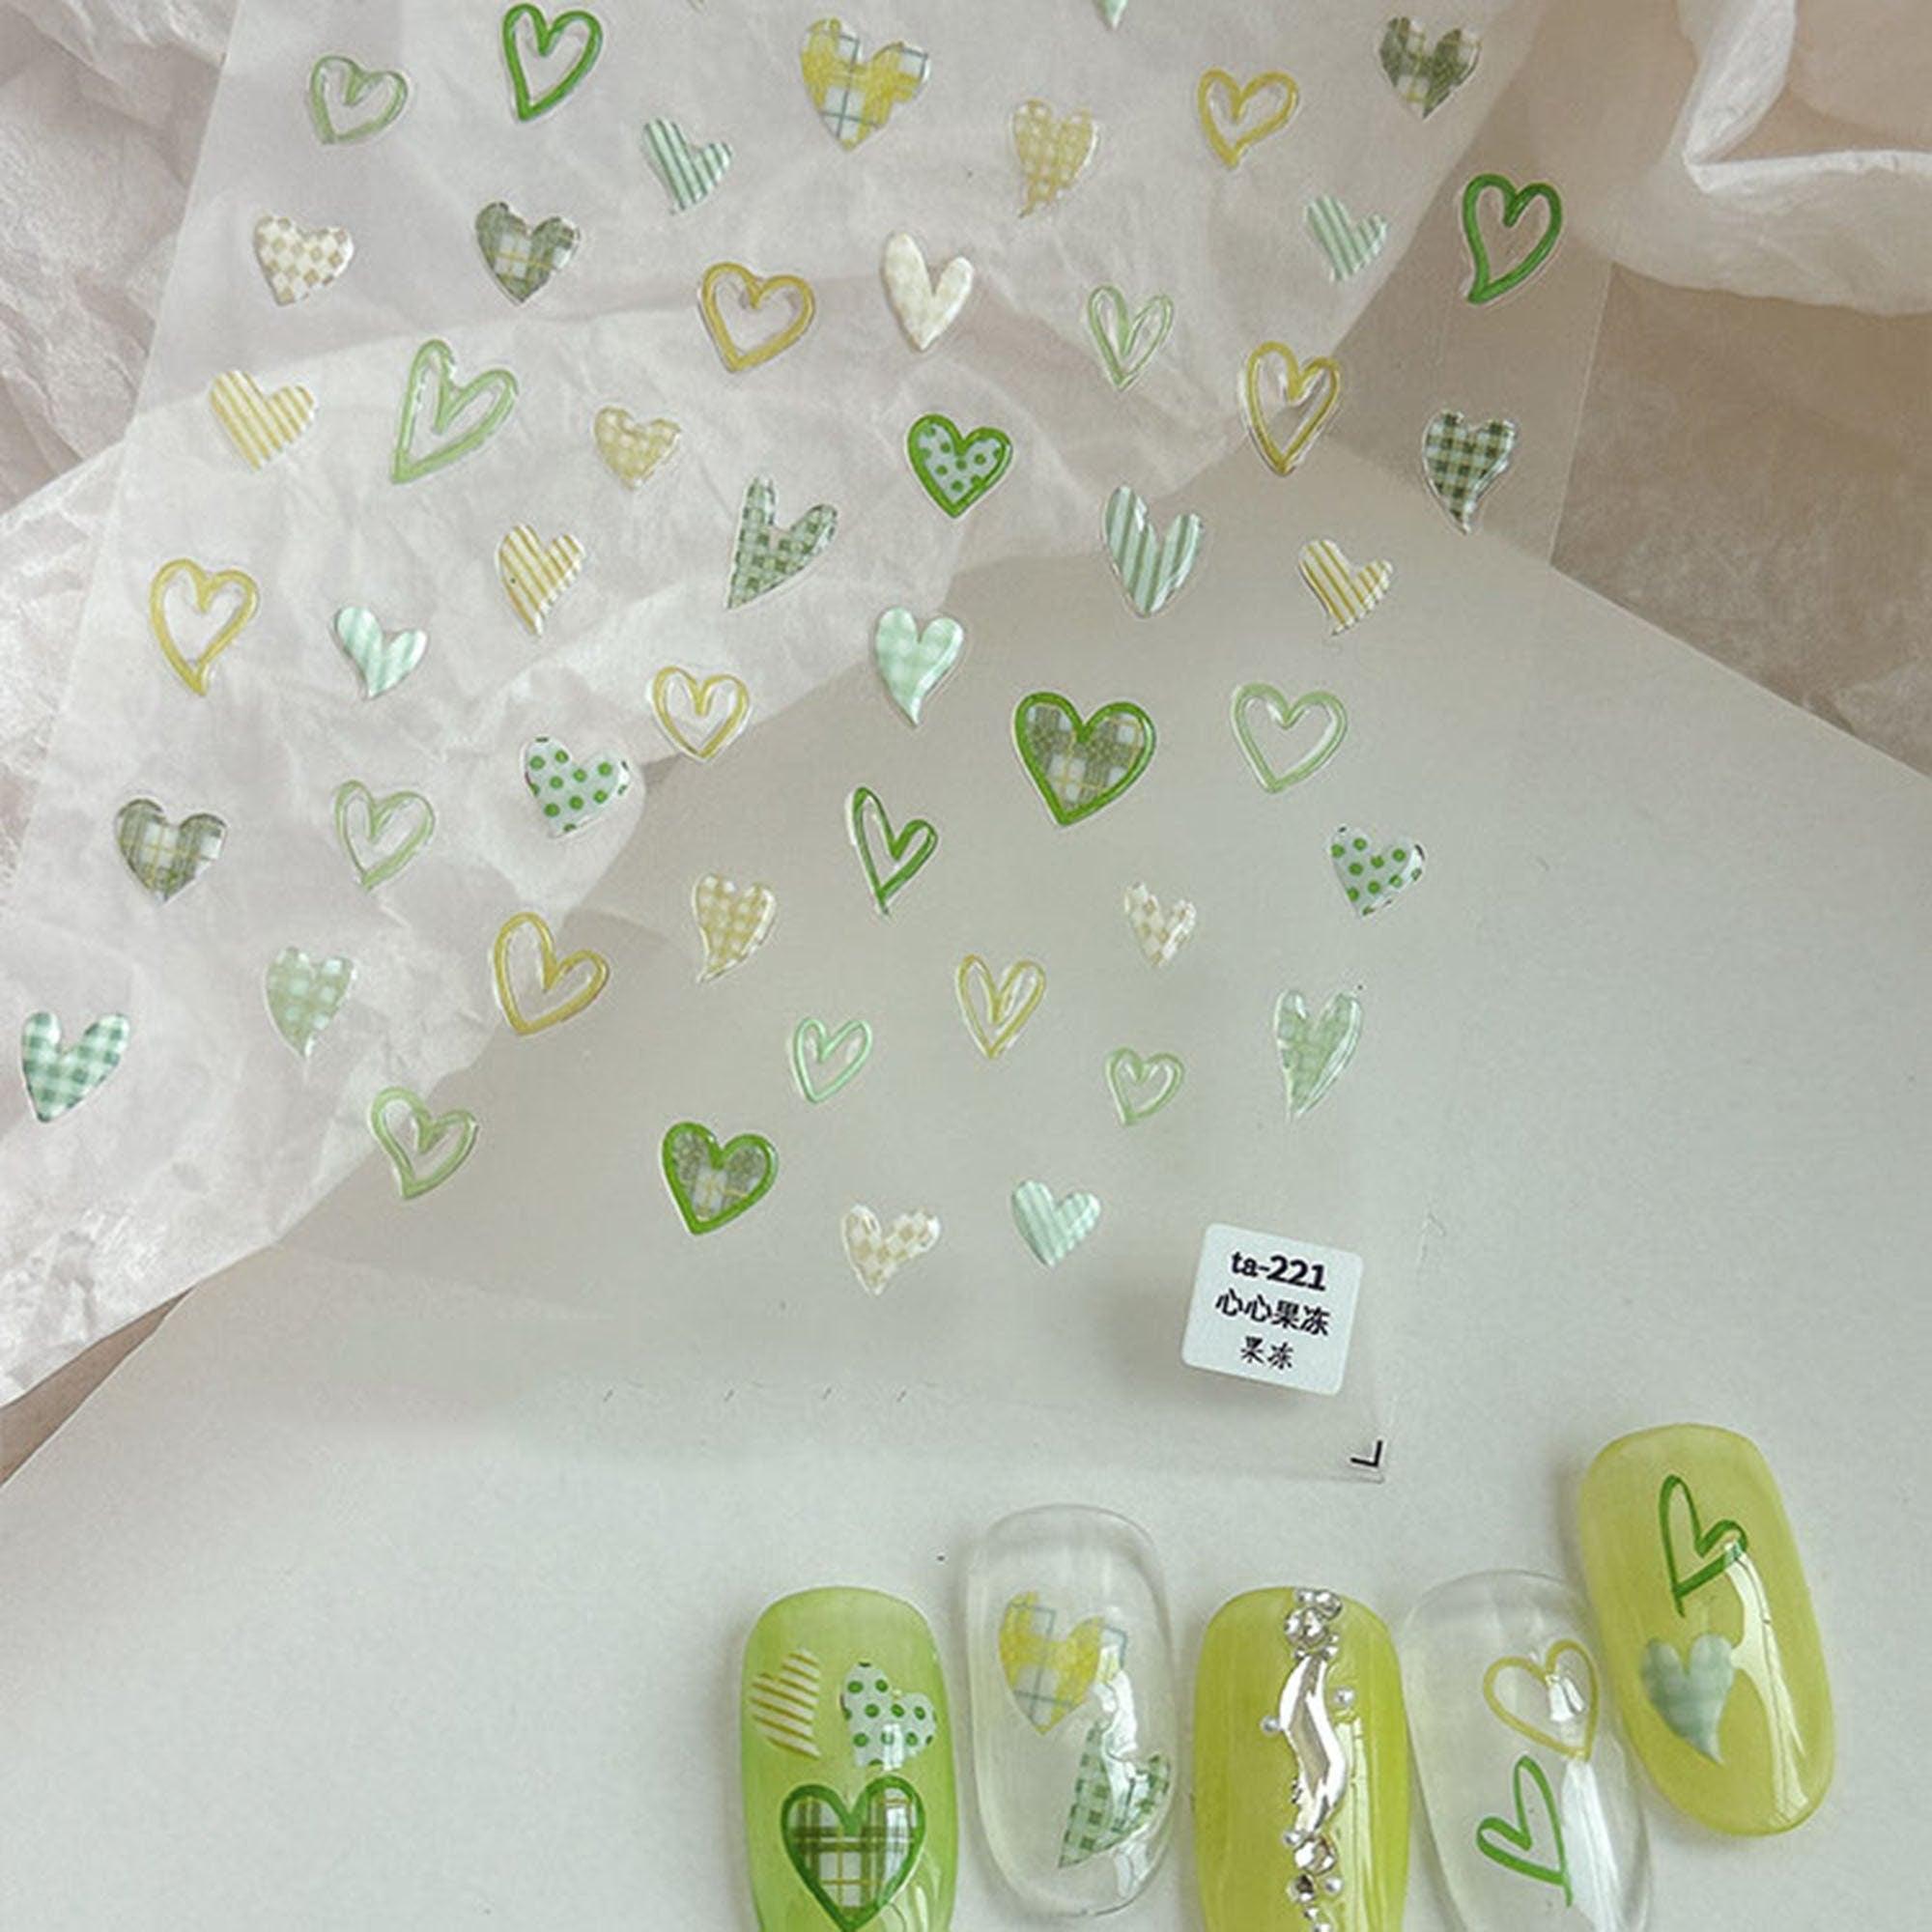 Heart Nail Stickers, Jelly Style Heart Nail Art, Heart Nail Decals, Kawaii Heart Nail Design, 3D Nail Stickers, DIY Nails - Miss Fairy Nails